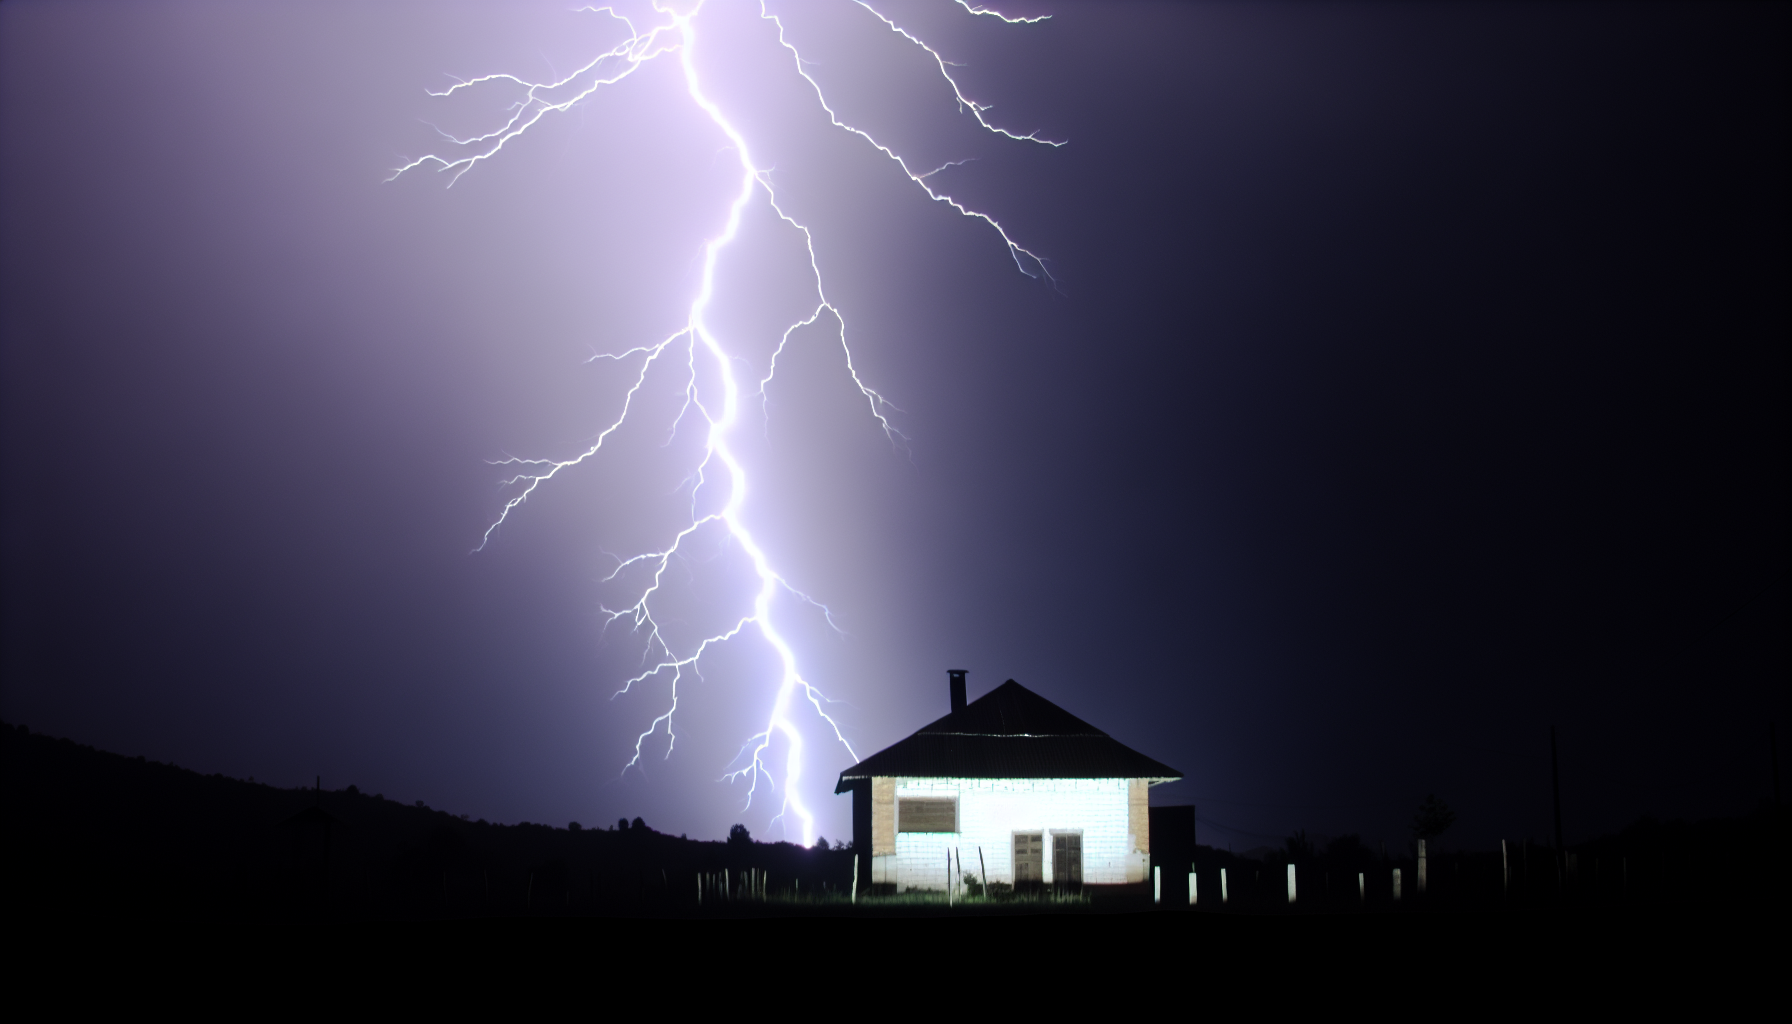 Lightning strikes behind a house